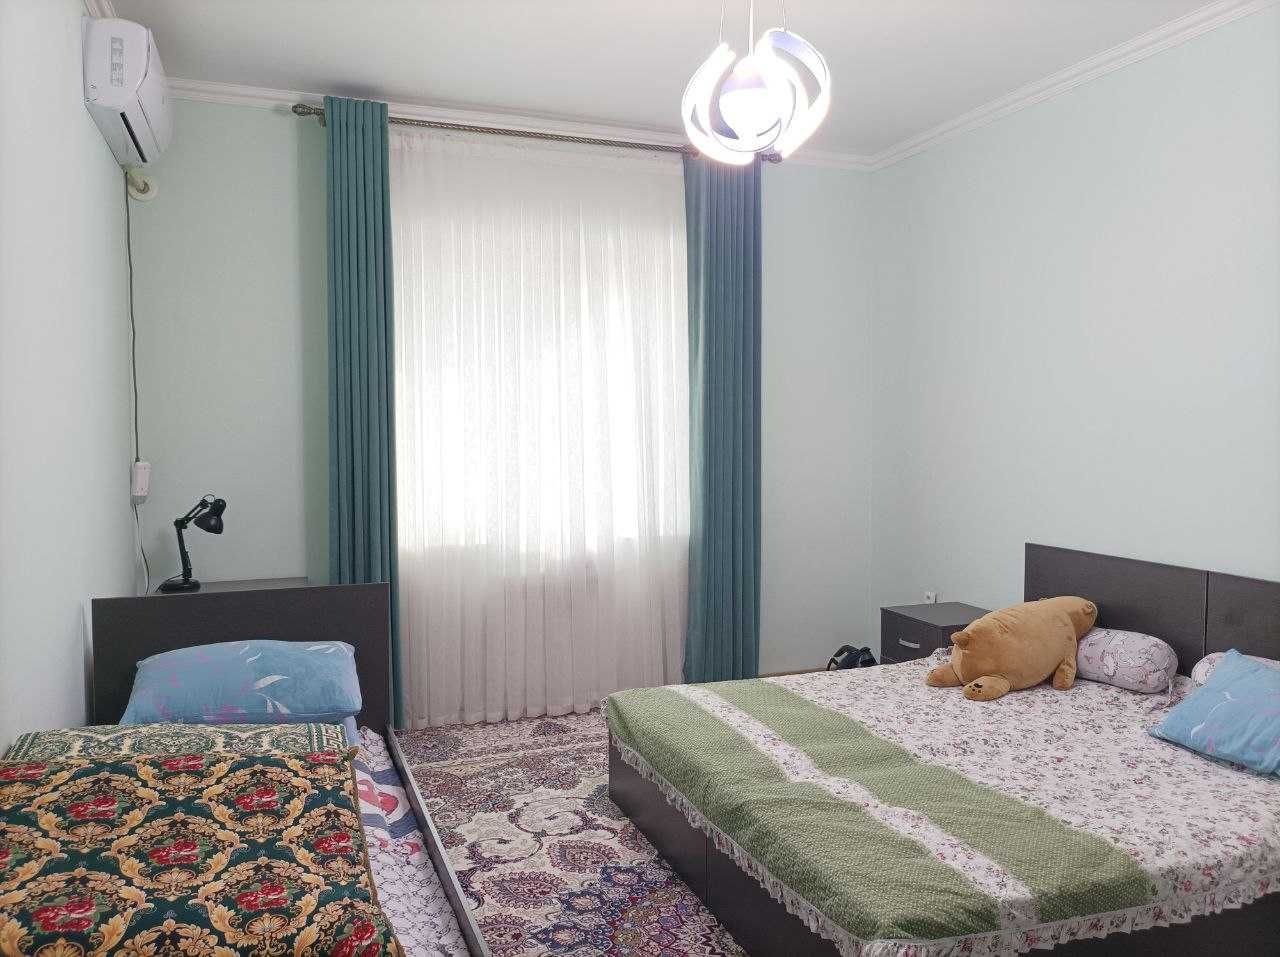 Продается 2-х комнатная квартира в М.Улугбеке (RM)